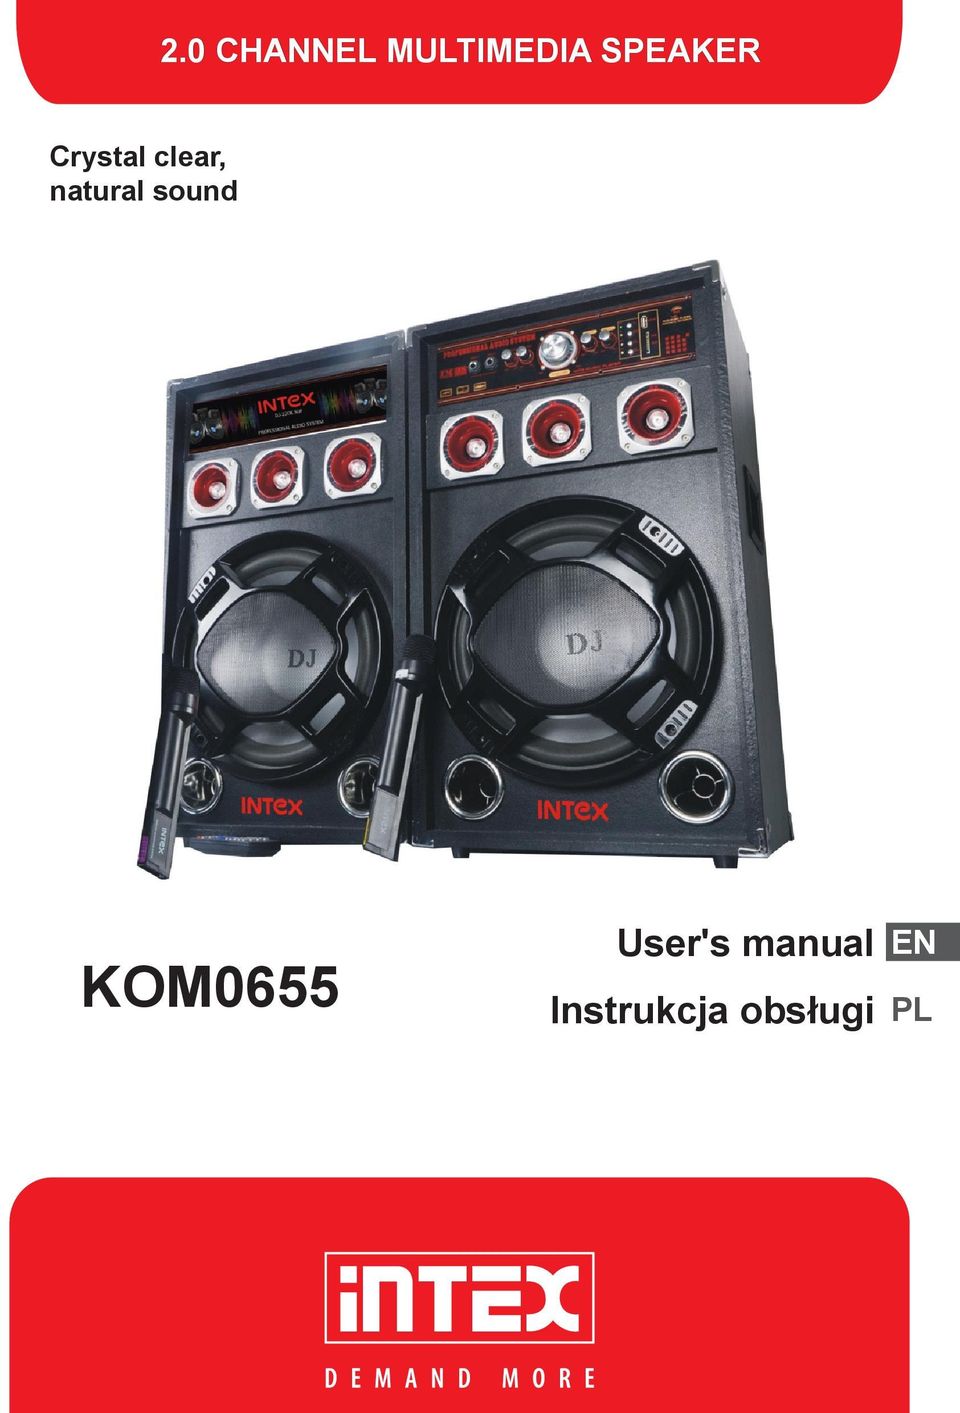 natural sound KOM0655